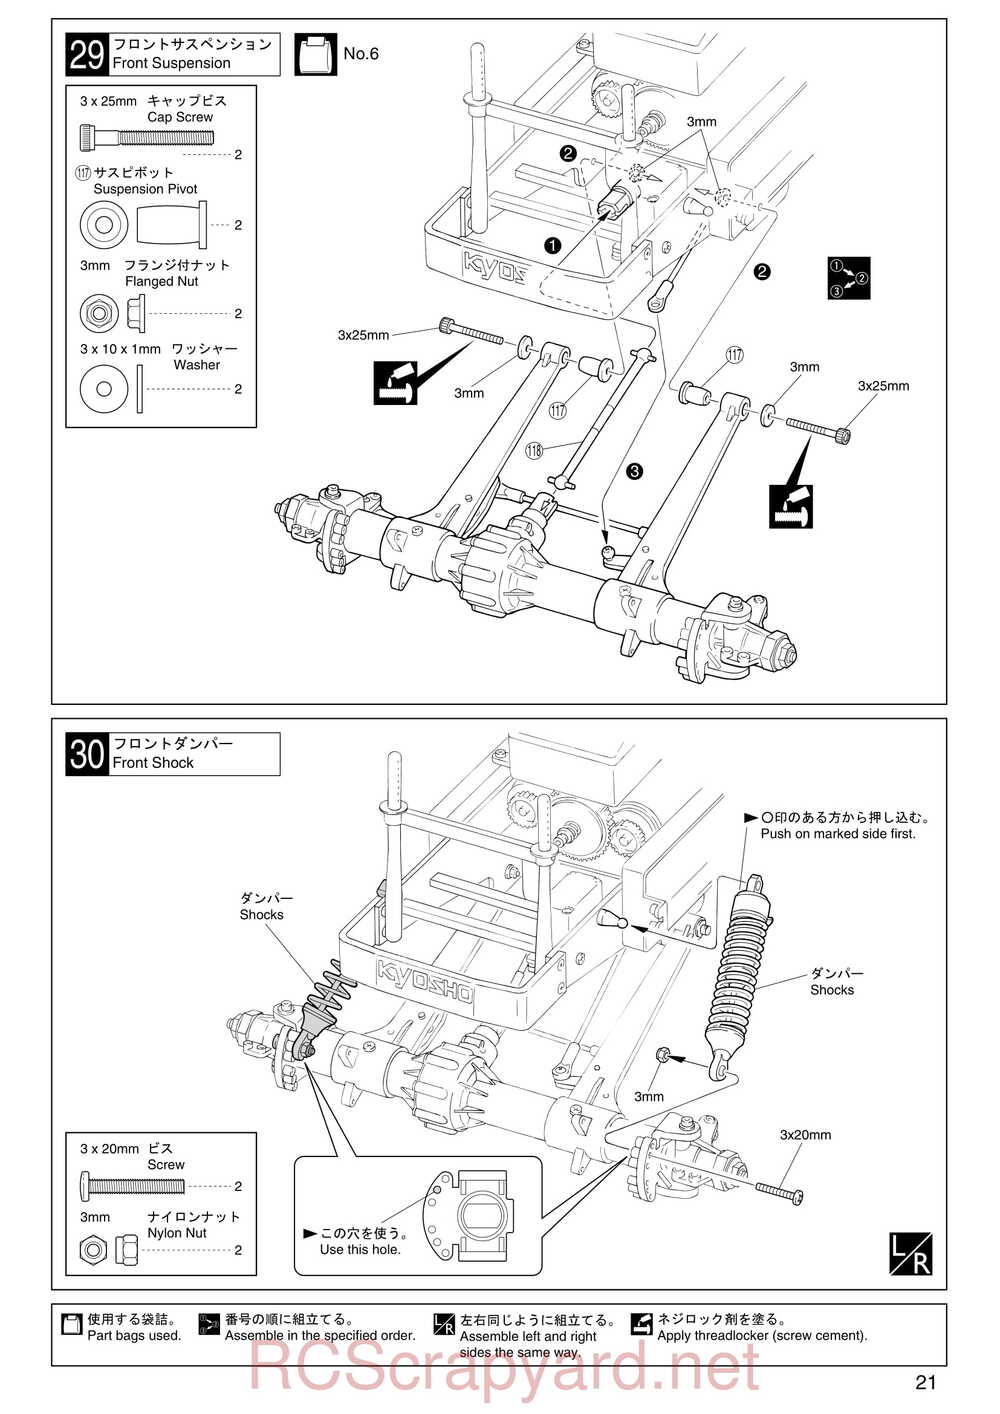 Kyosho - 30521b - Twin-Force - Manual - Page 21